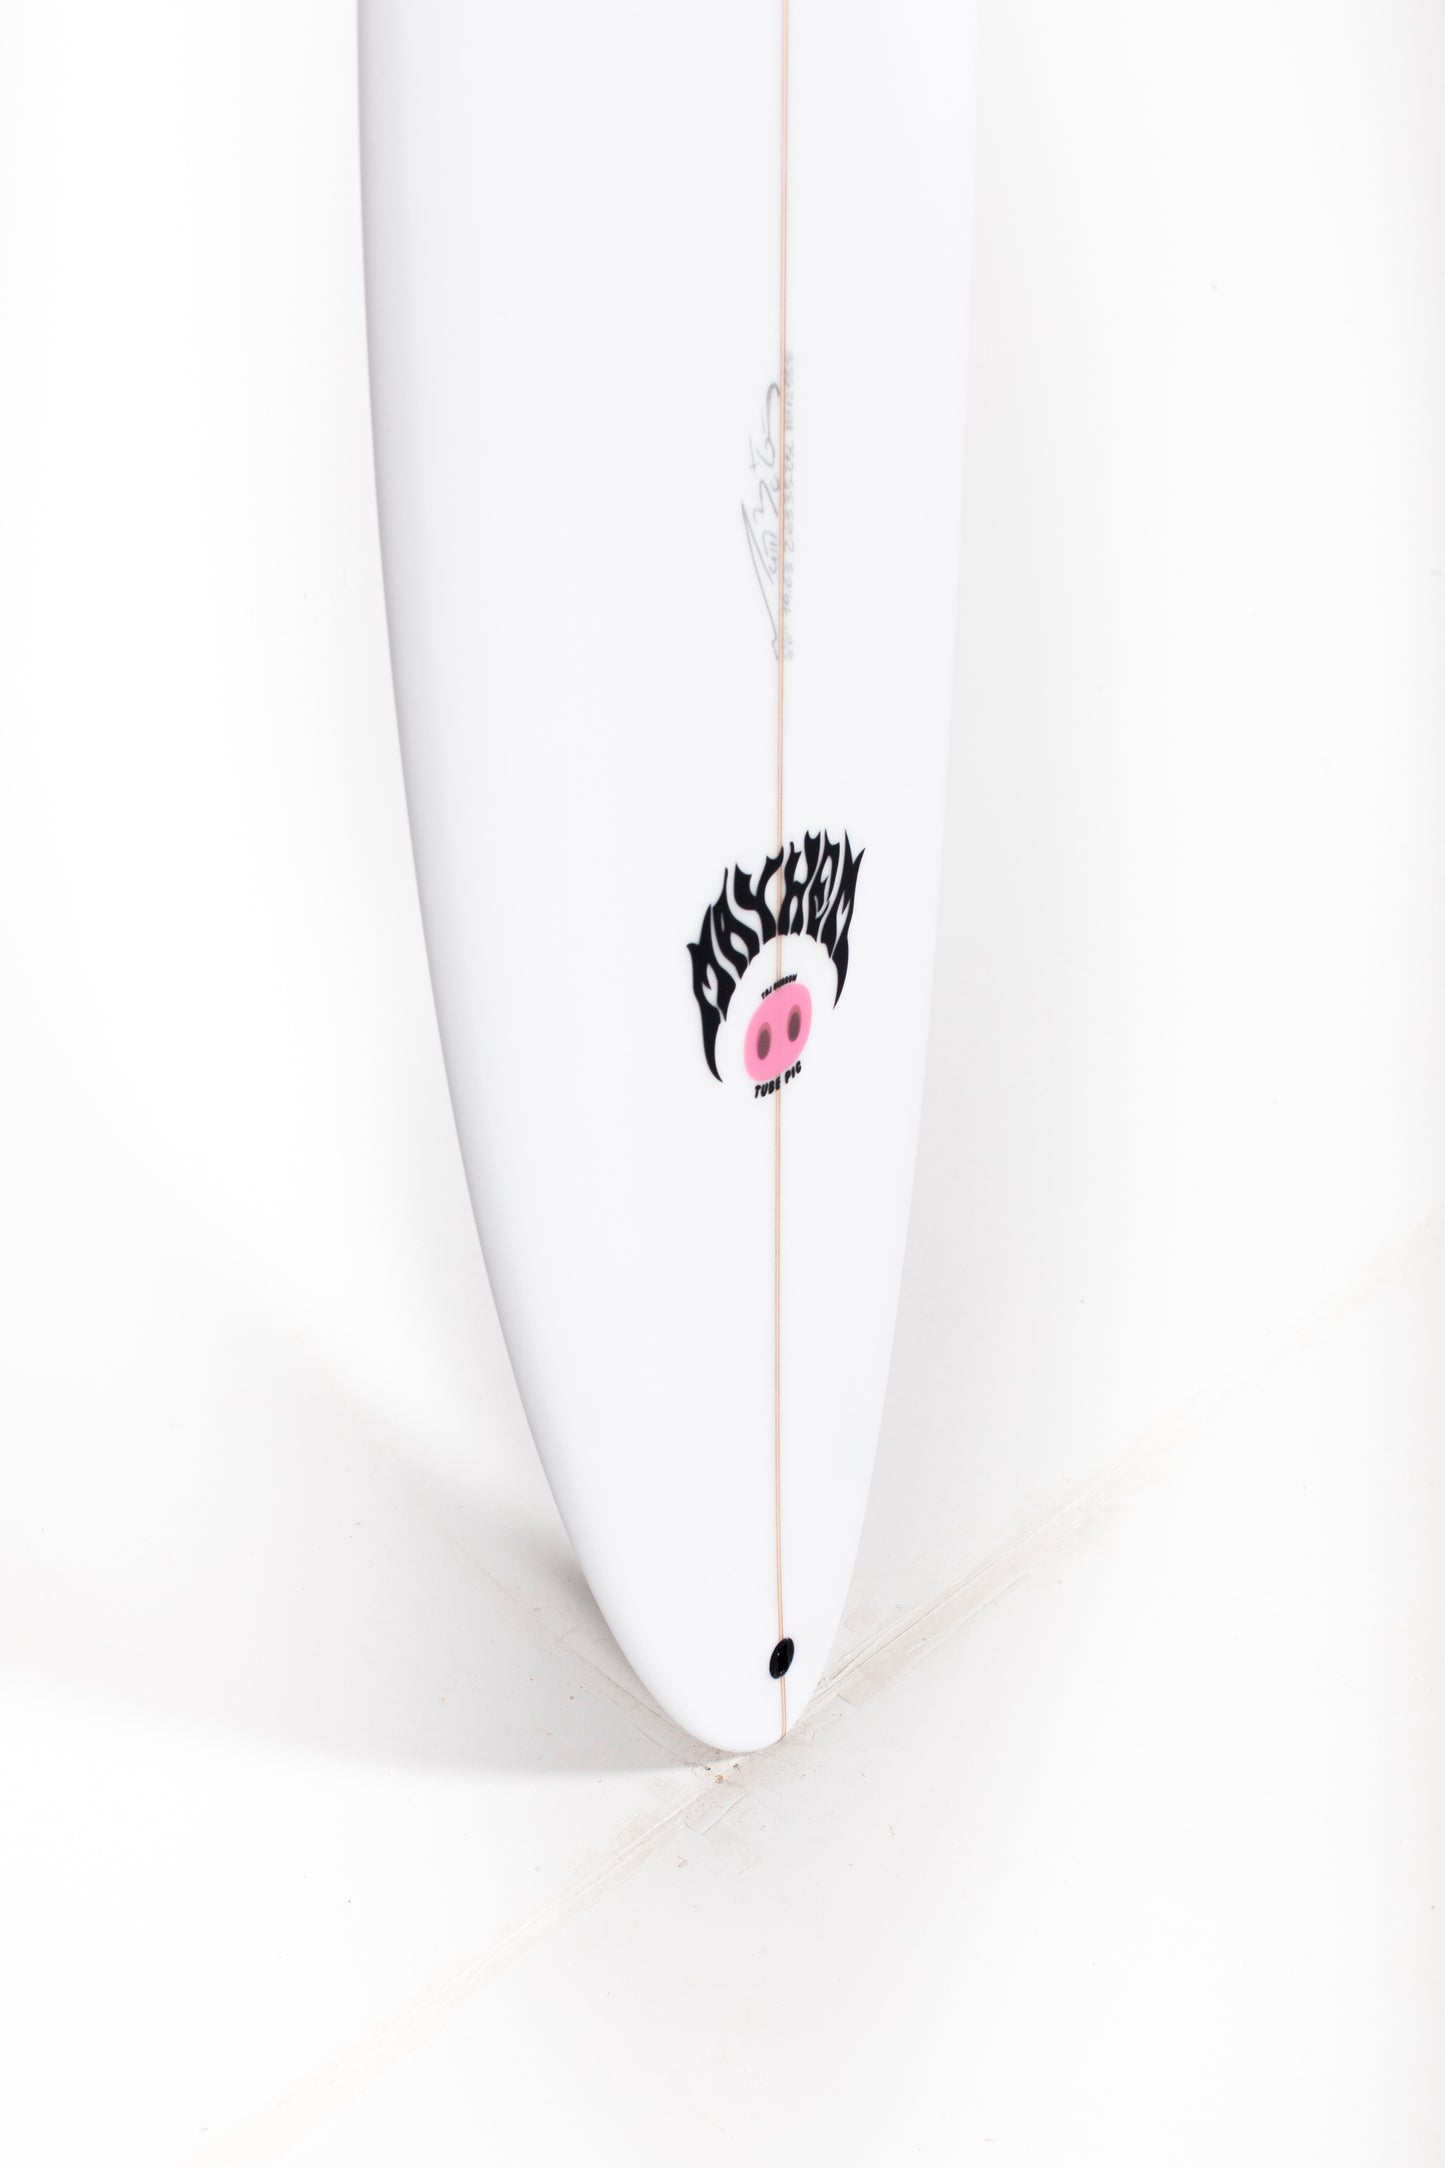 
                  
                    Pukas Surf Shop - Lost Surfboards - TUBE PIG by Matt Biolos - 6’6” x 19,63 x 2,63 - 35,25L - MH12558
                  
                